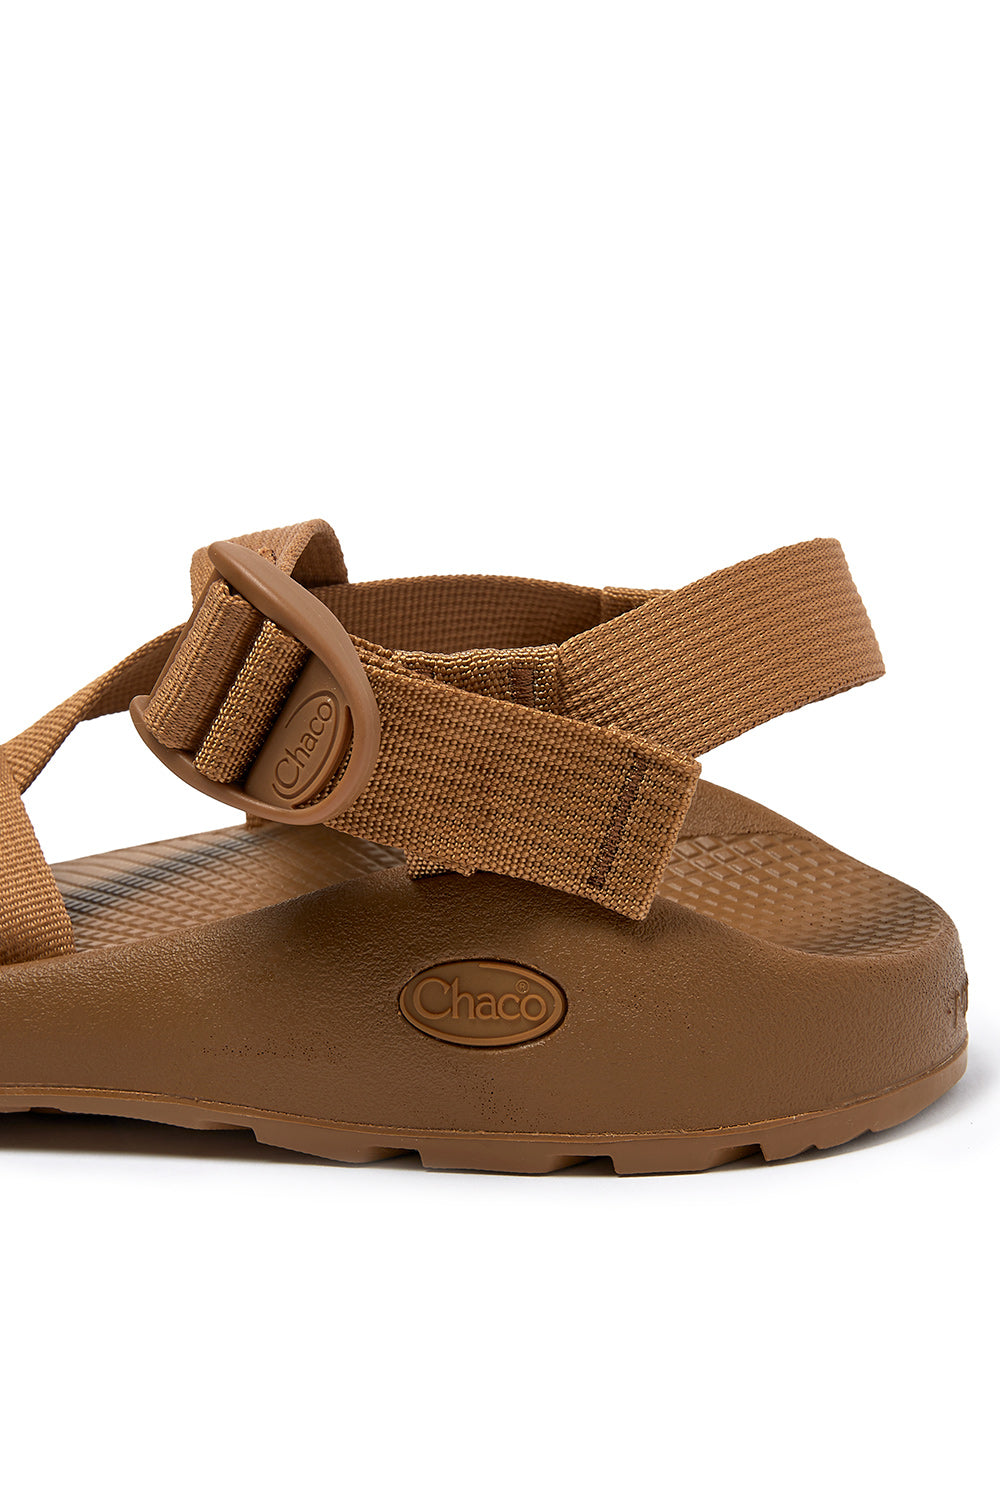 Chaco Men's Z1 Classic Sandals - Bone Brown